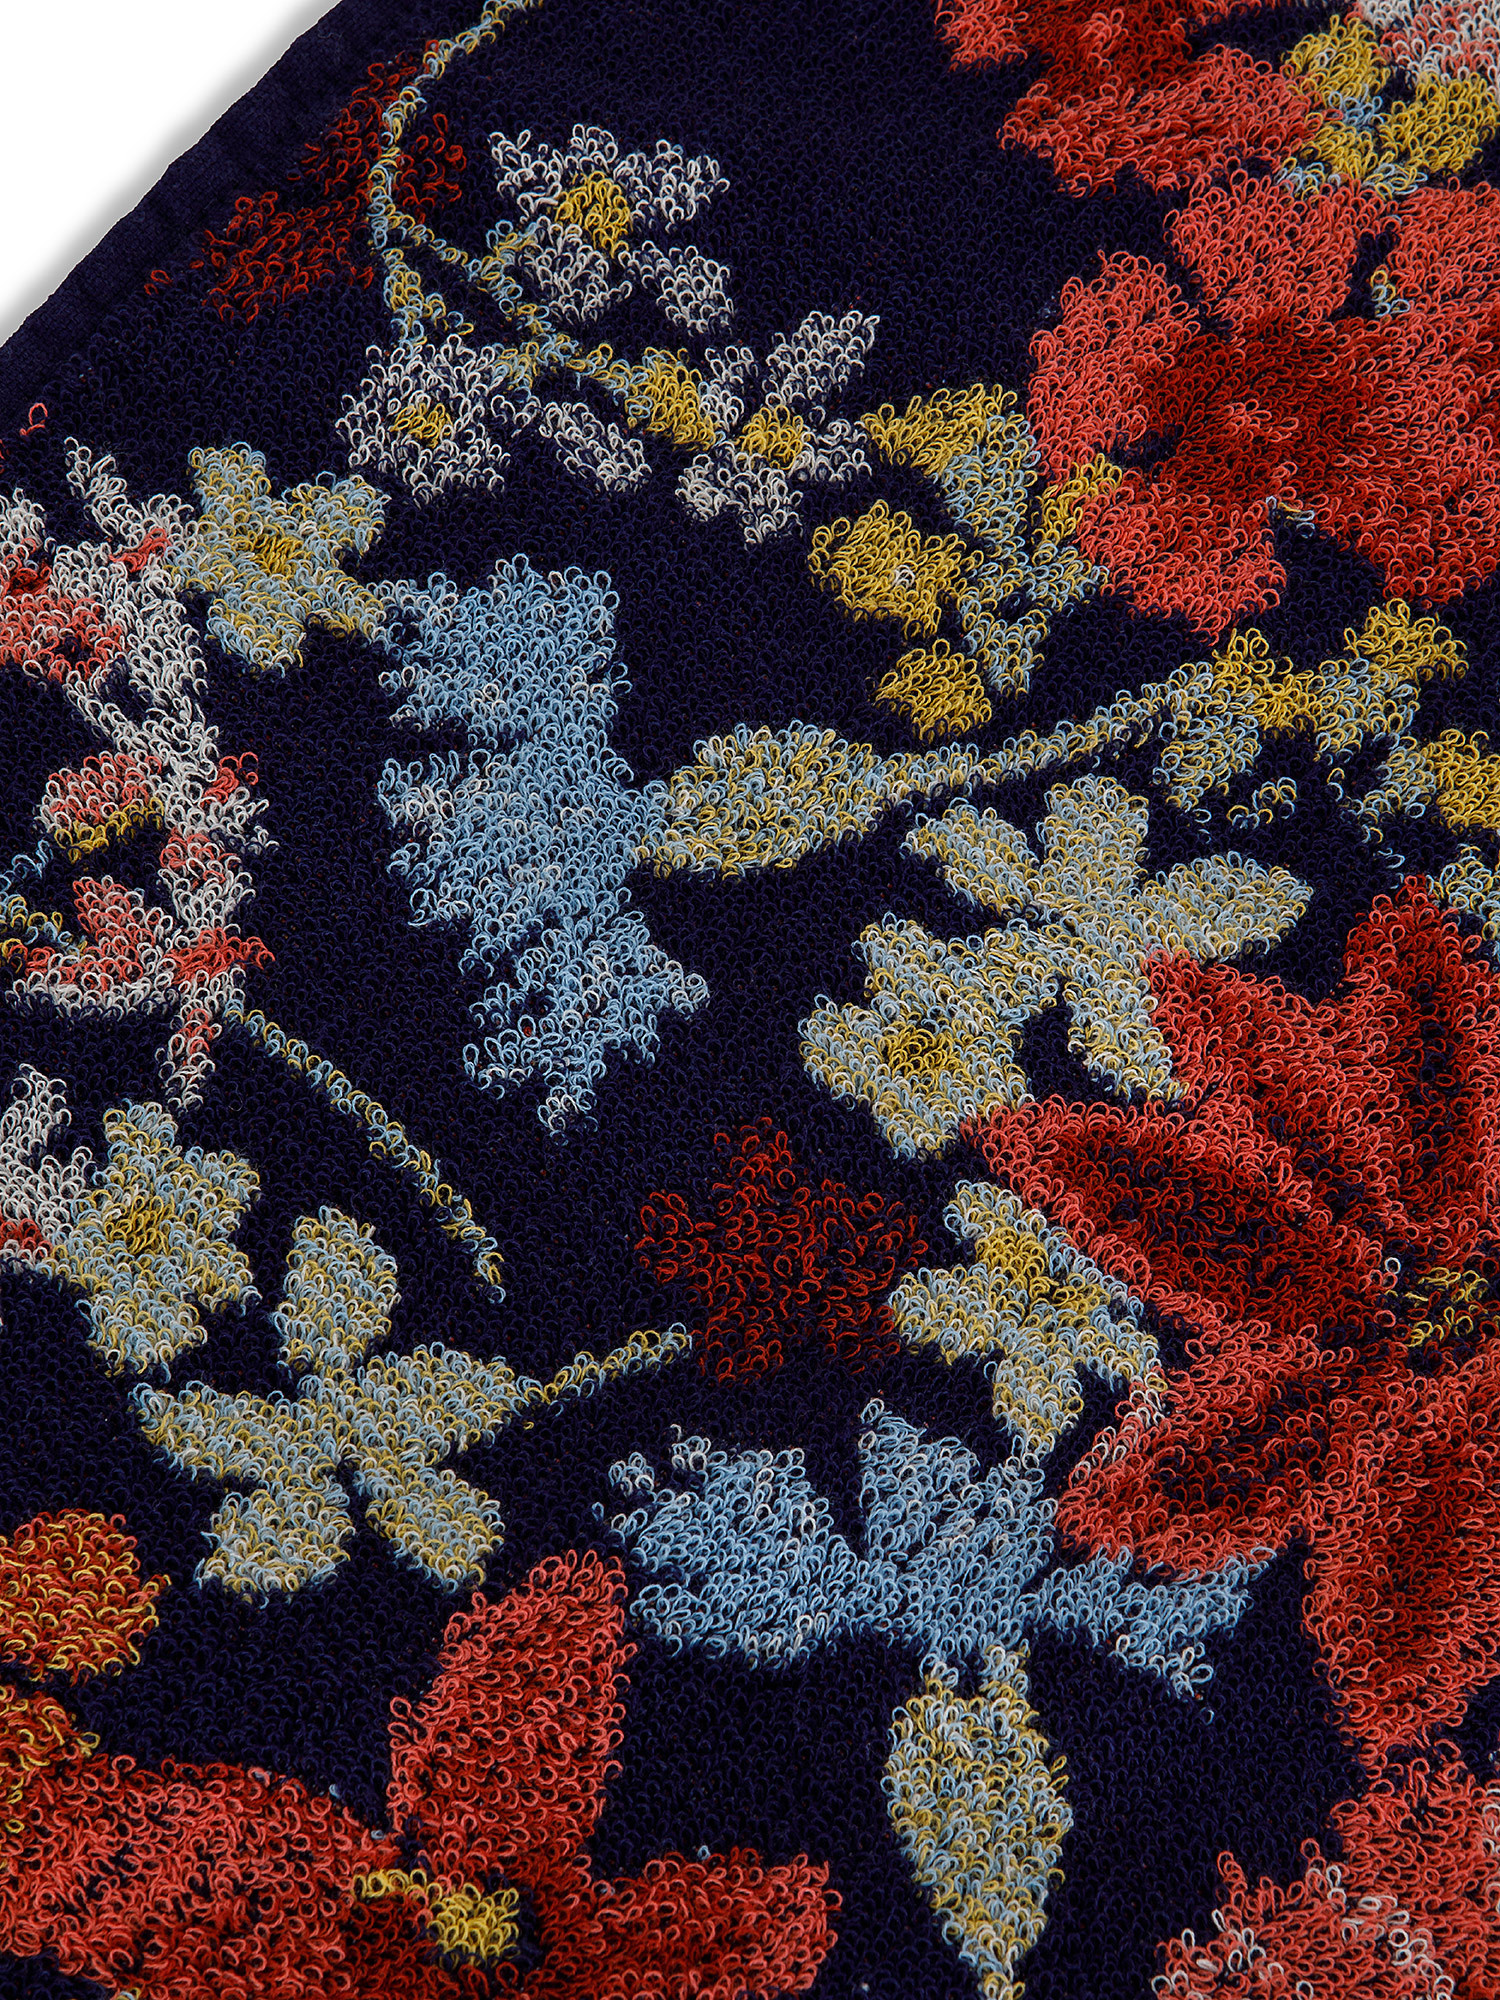 Asciugamano puro cotone tinto filo motivo floreale, Multicolor, large image number 2